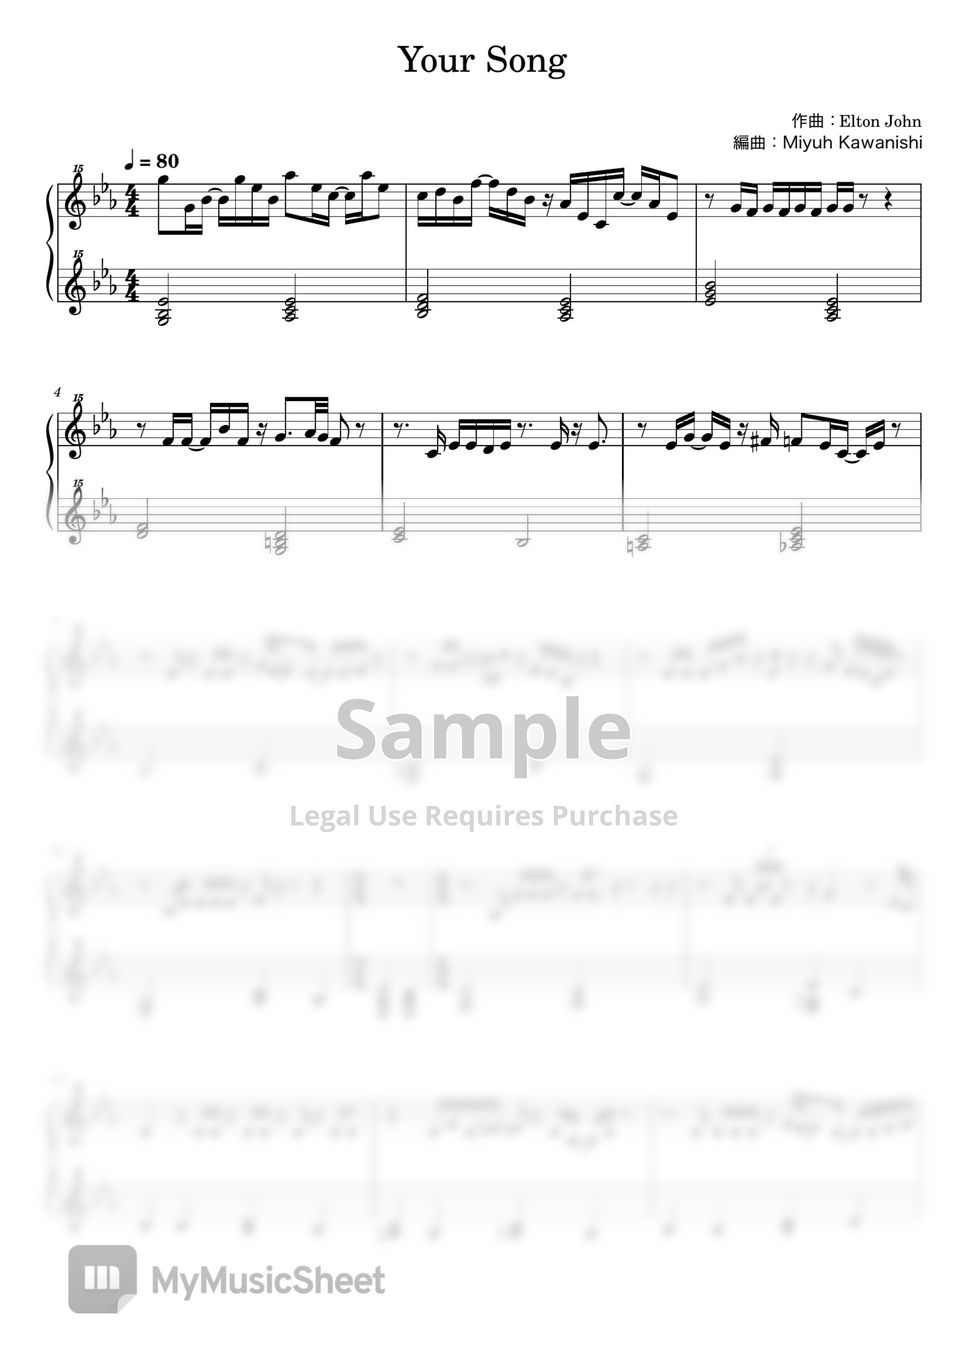 JOHN ELTON - YOUR SONG (Toy Piano / Piano / 32keys) by Miyuh Kawanishi